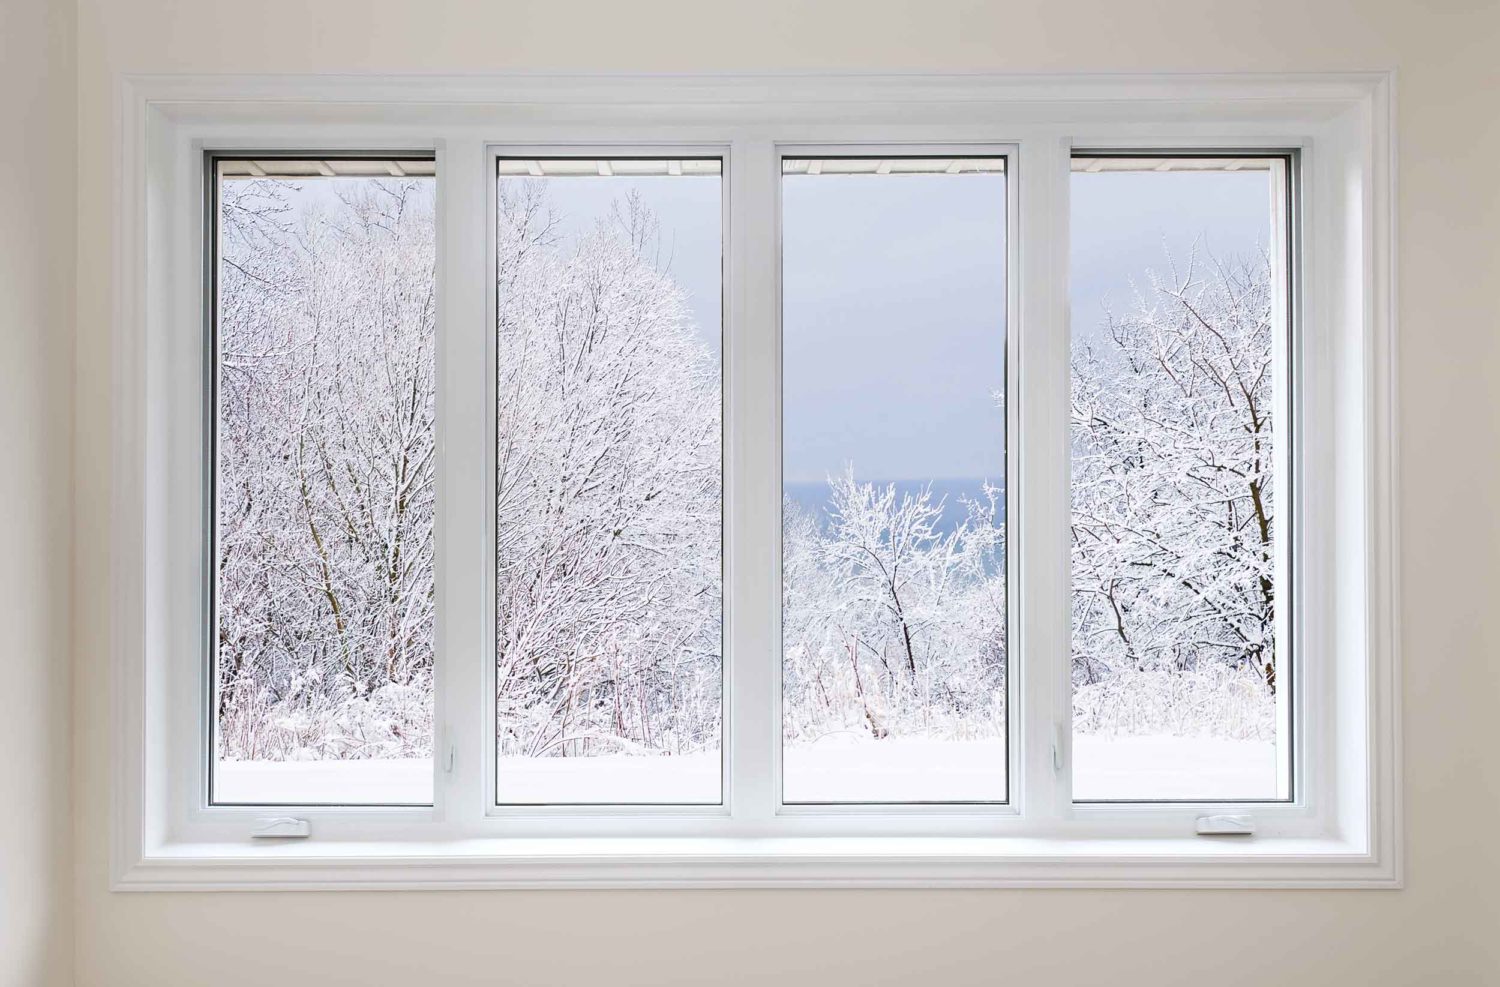 5 Reasons to Upgrade Windows & Doors During Winter Season